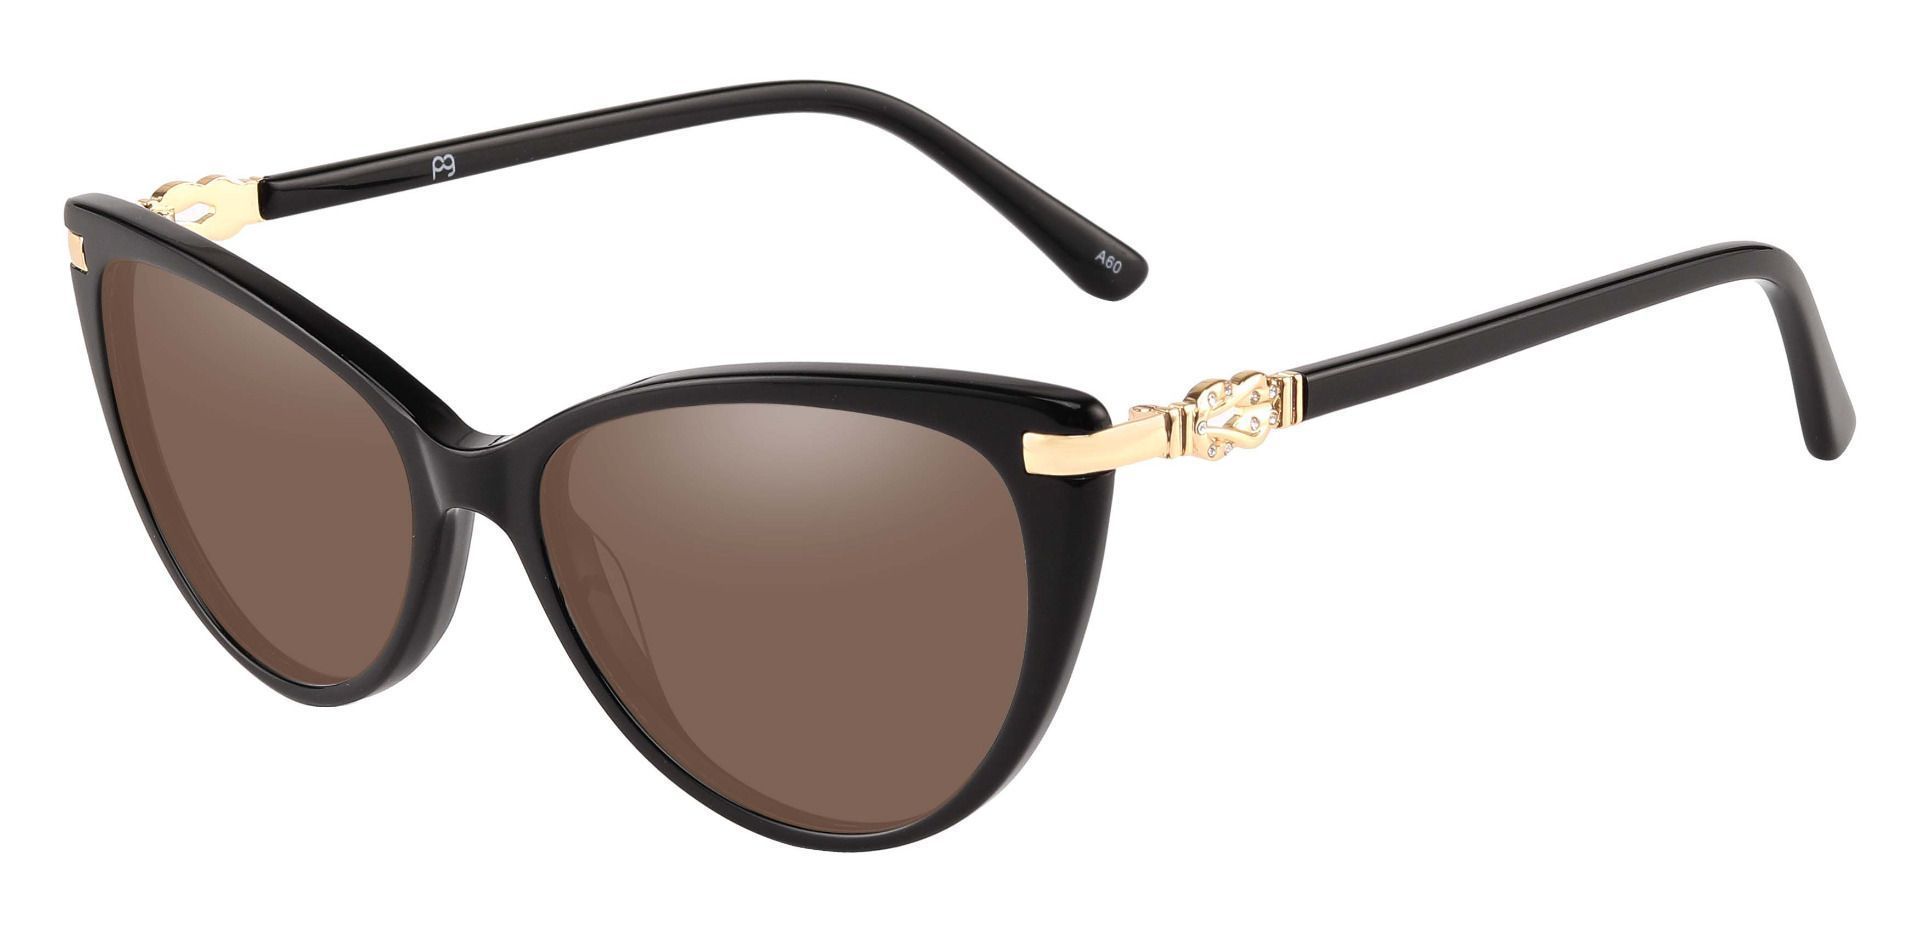 Starla Cat Eye Non-Rx Sunglasses - Black Frame With Brown Lenses